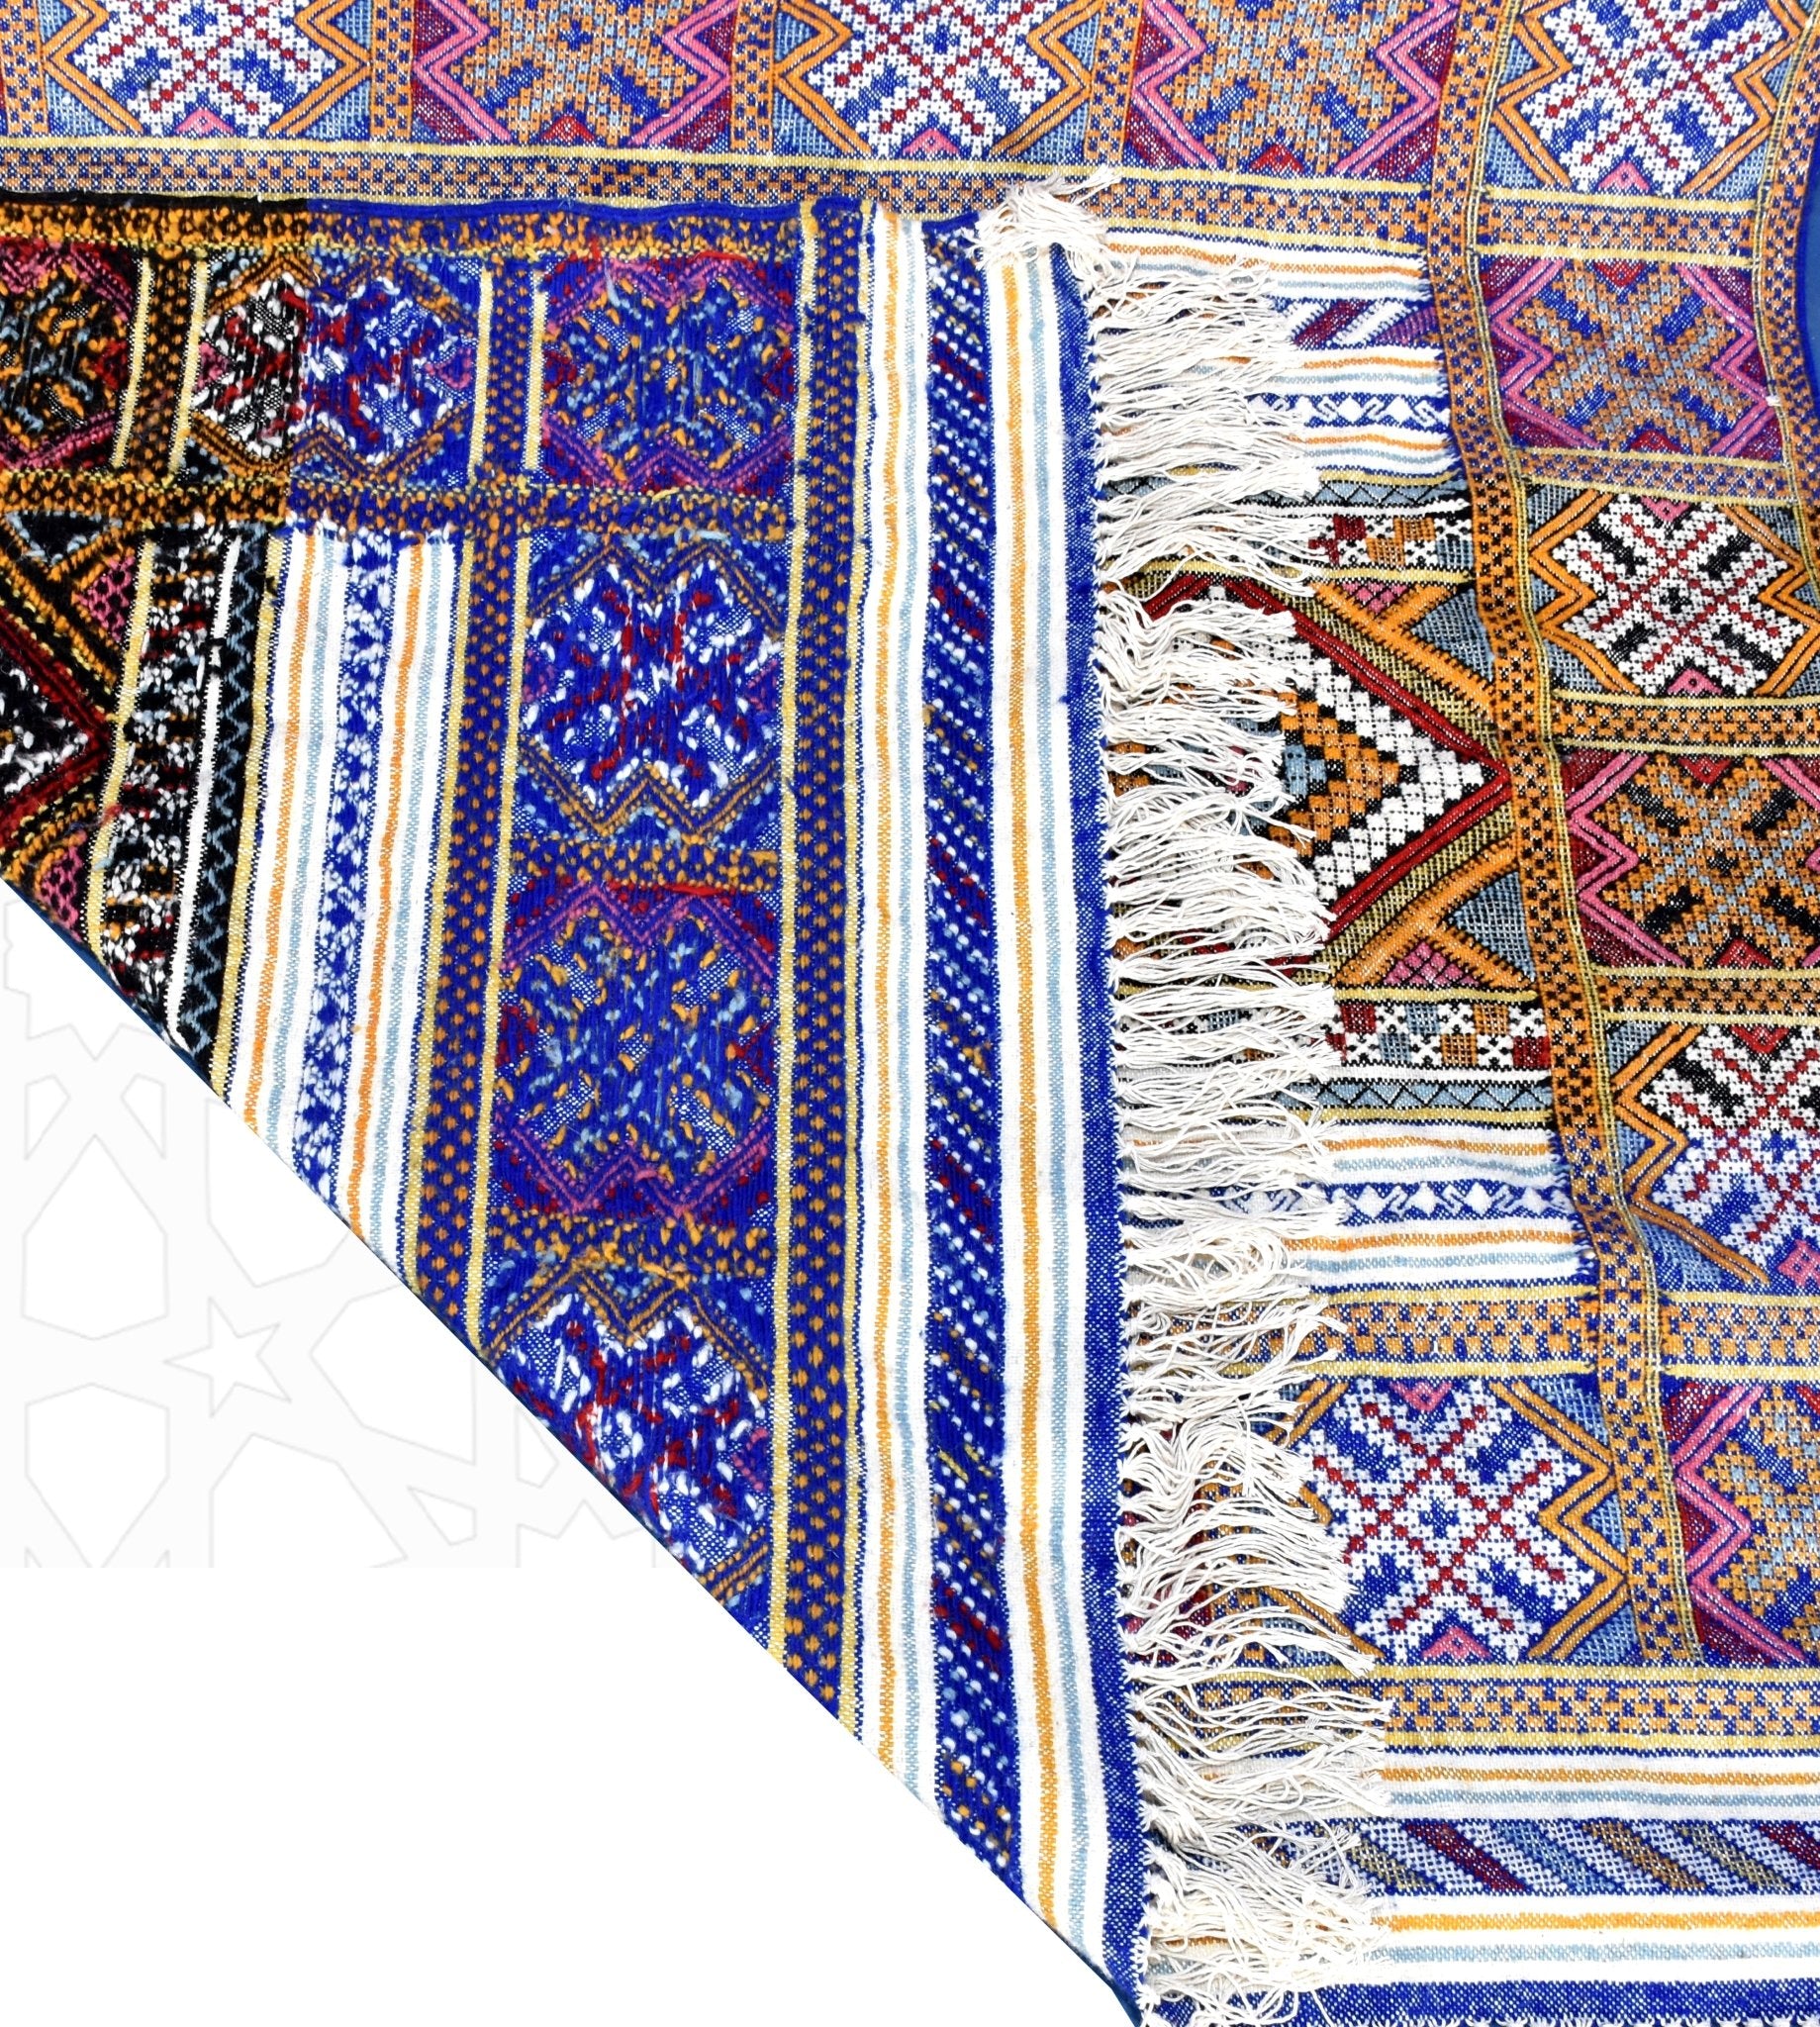 Flatweave kilim hanbal Moroccan rug - 5.25 x 7.9 ft / 160 x 240 cm - Berbers Market